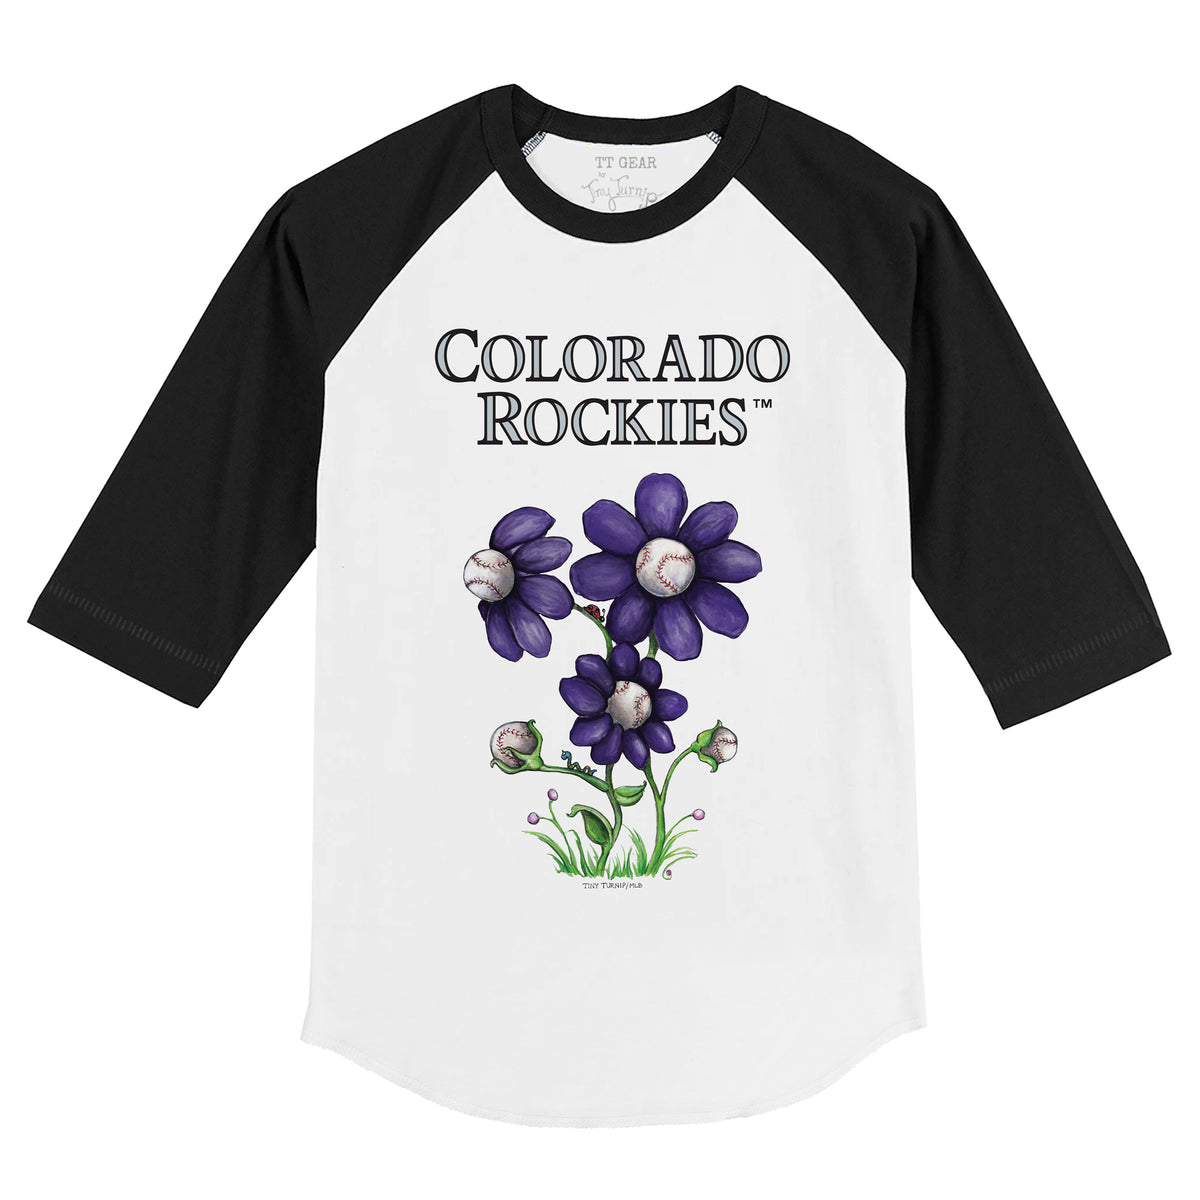 MLB Team Apparel Toddler Colorado Rockies Purple 2-Piece Set